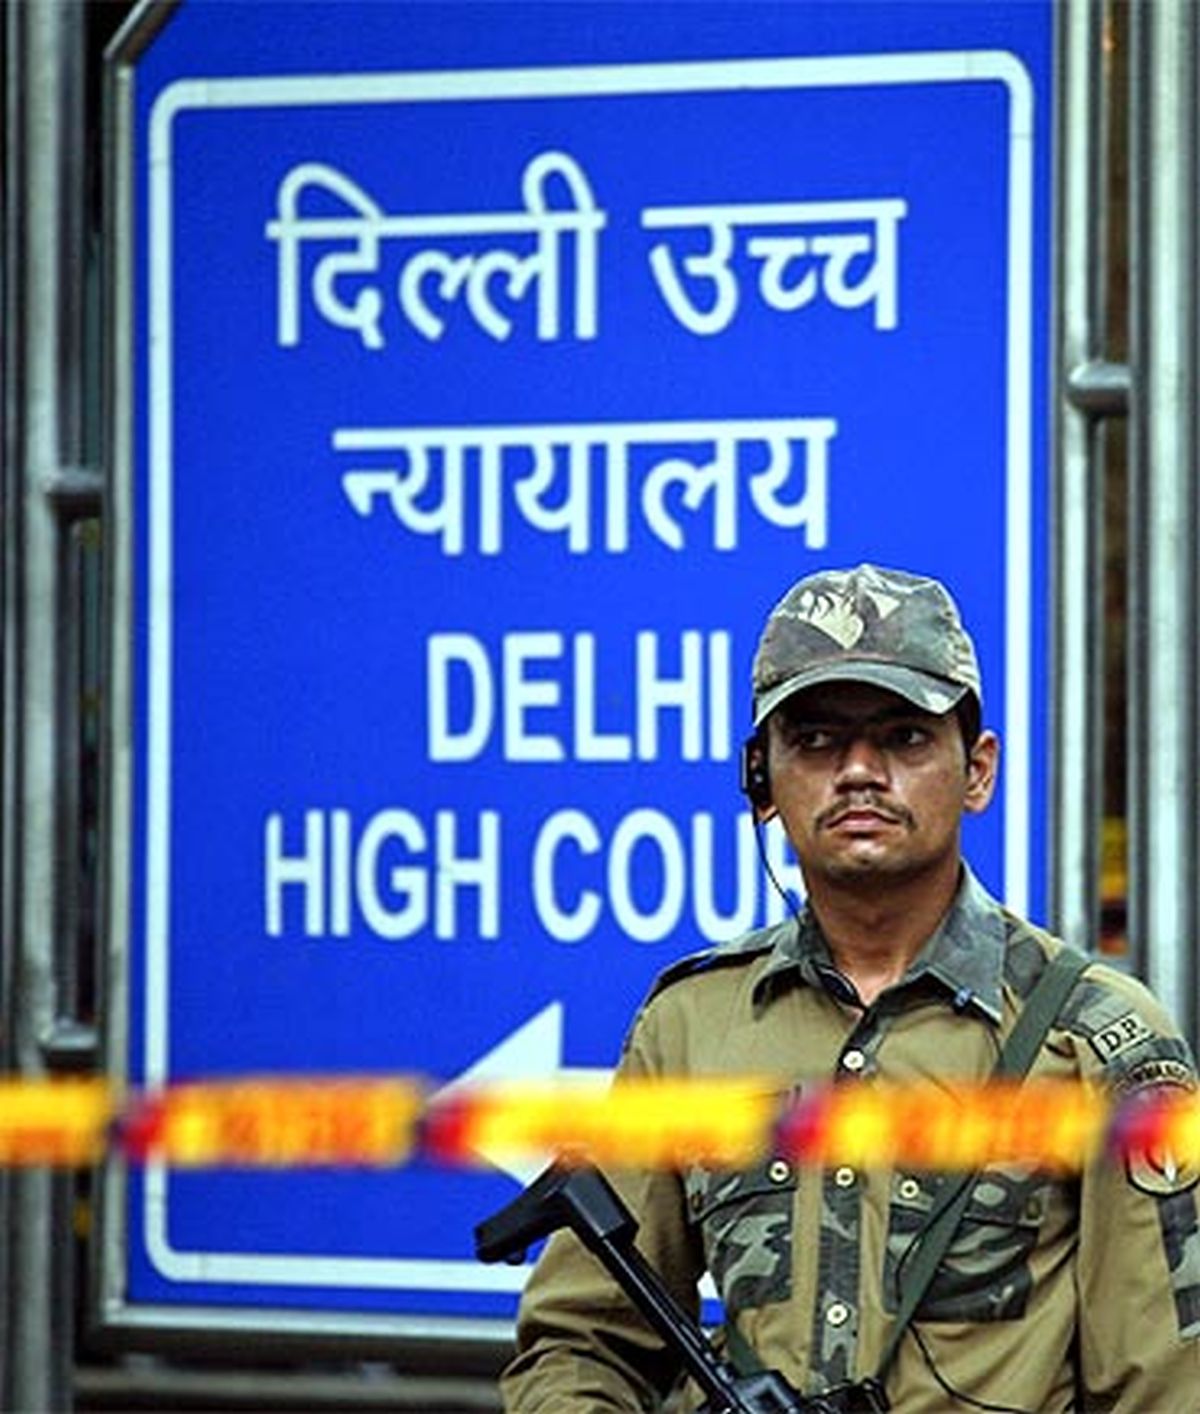 Delhi HC gets email threatening 'biggest bomb blast'